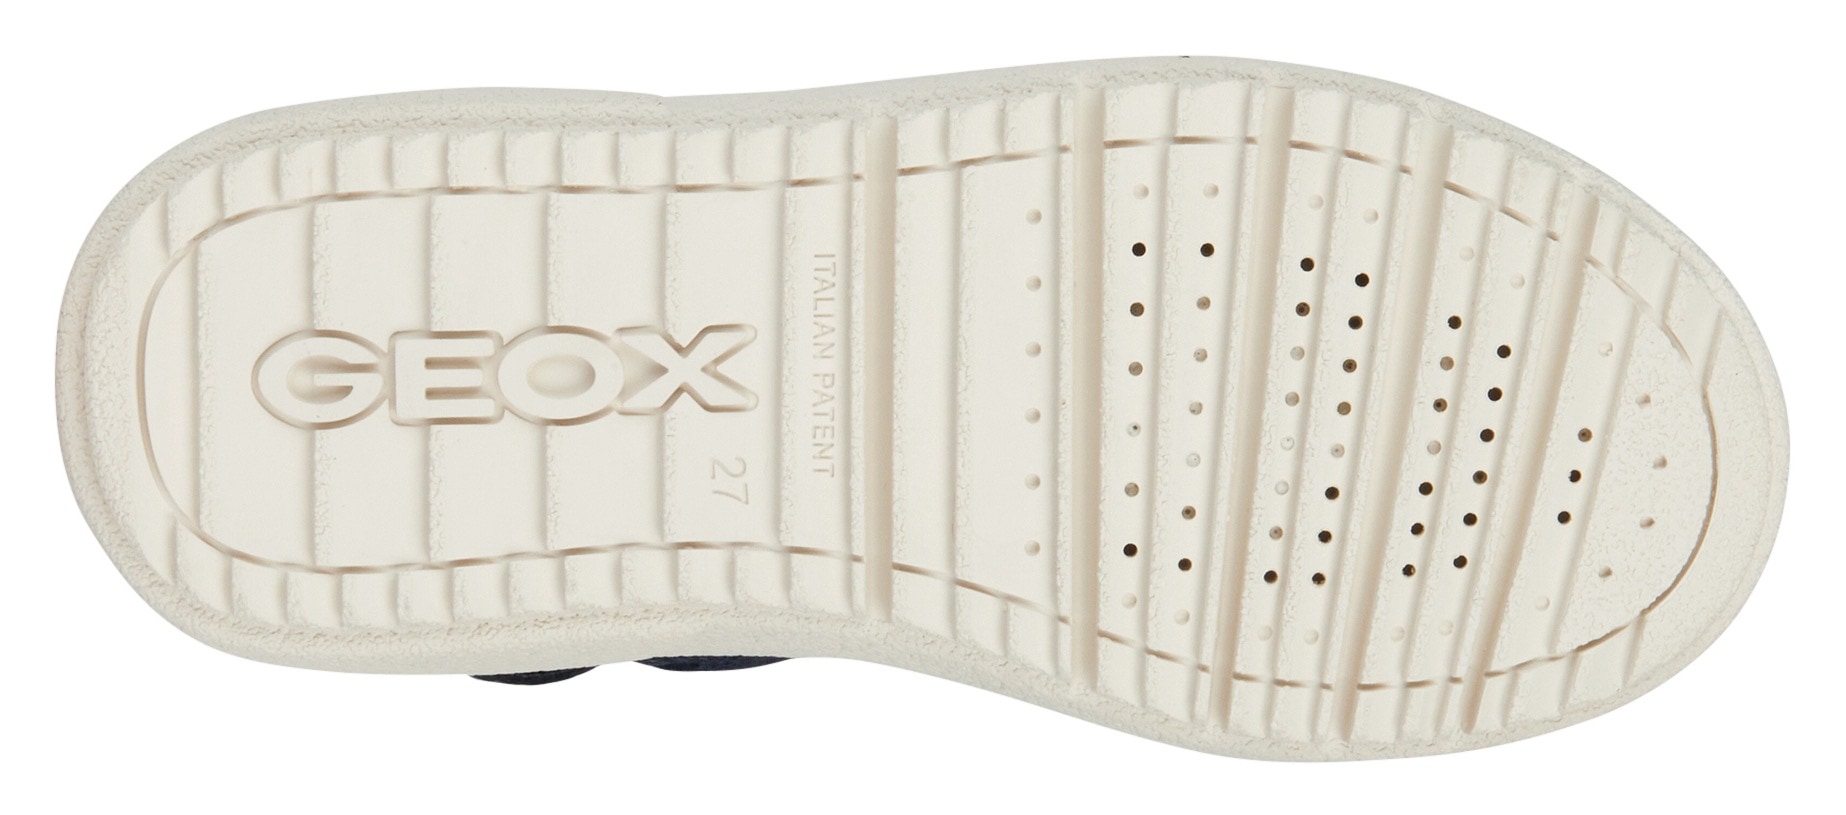 Geox Winterstiefel »J THELEVEN GIRL BABX«, Sneaker, Kinderstiefel mit atmungsaktiver Geox-Spezial Membrane